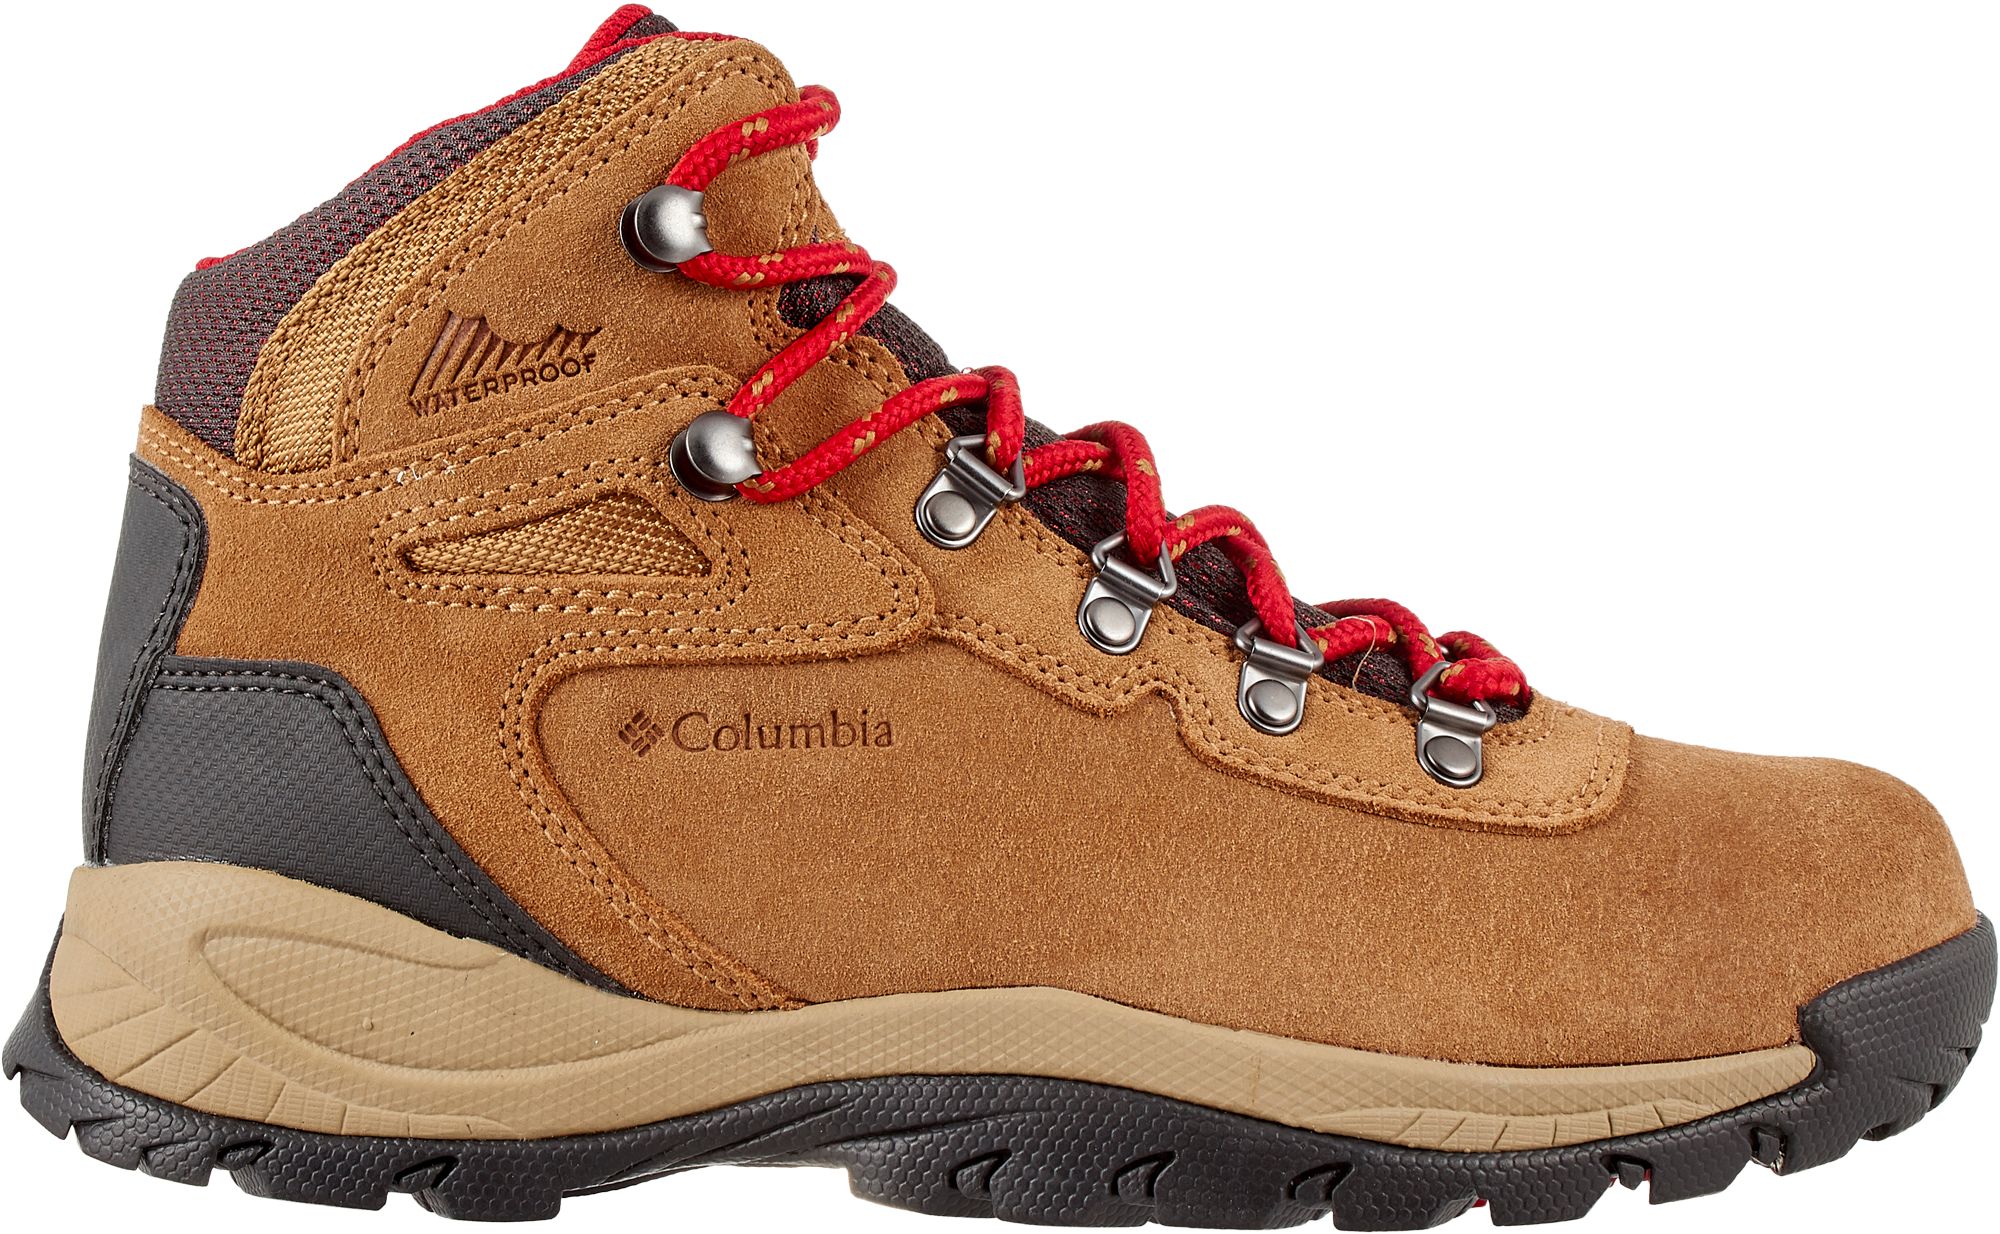 Photos - Trekking Shoes Columbia Women's Newton Ridge Plus Amped Waterproof Hiking Boots, Size 9.5 